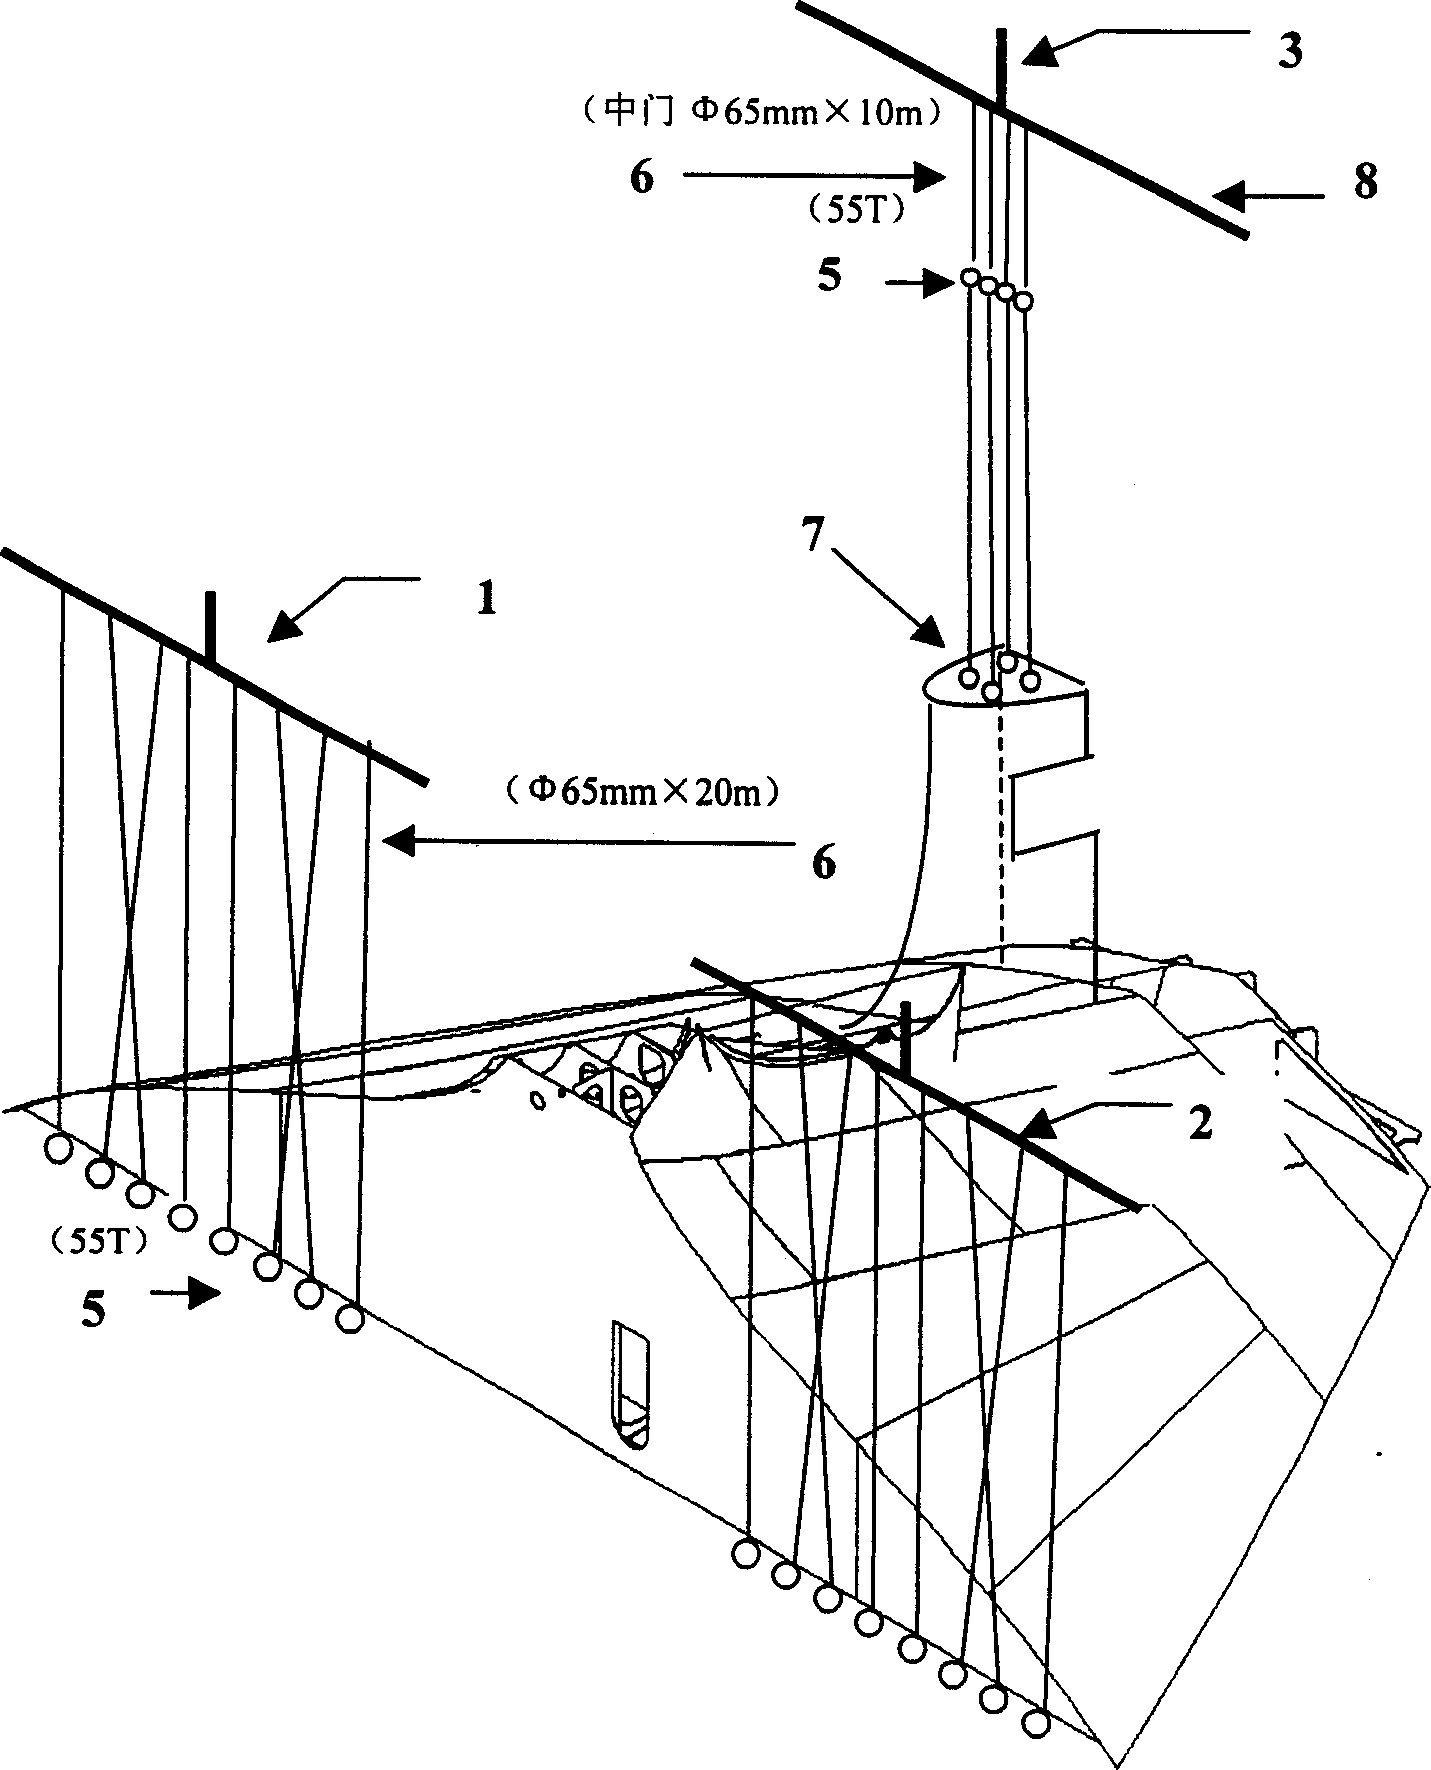 Sectional hoisting method